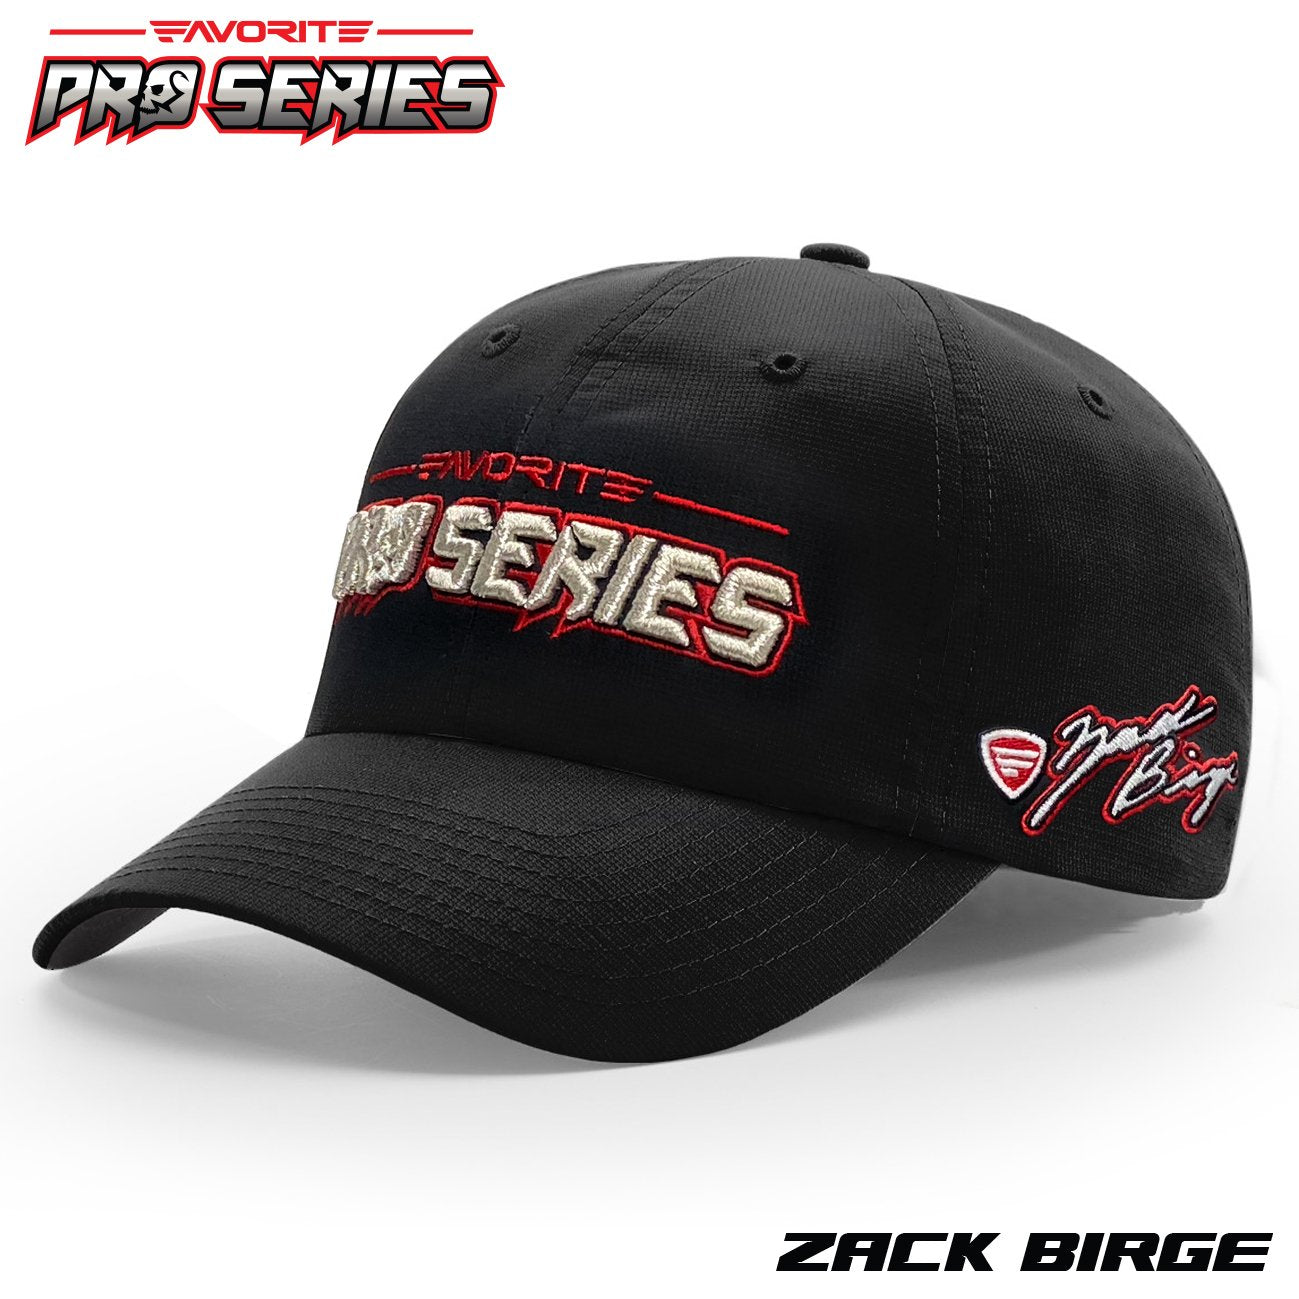 Favorite Fishing Favorite Pro Series Hat Zack Birge - Size - One Size